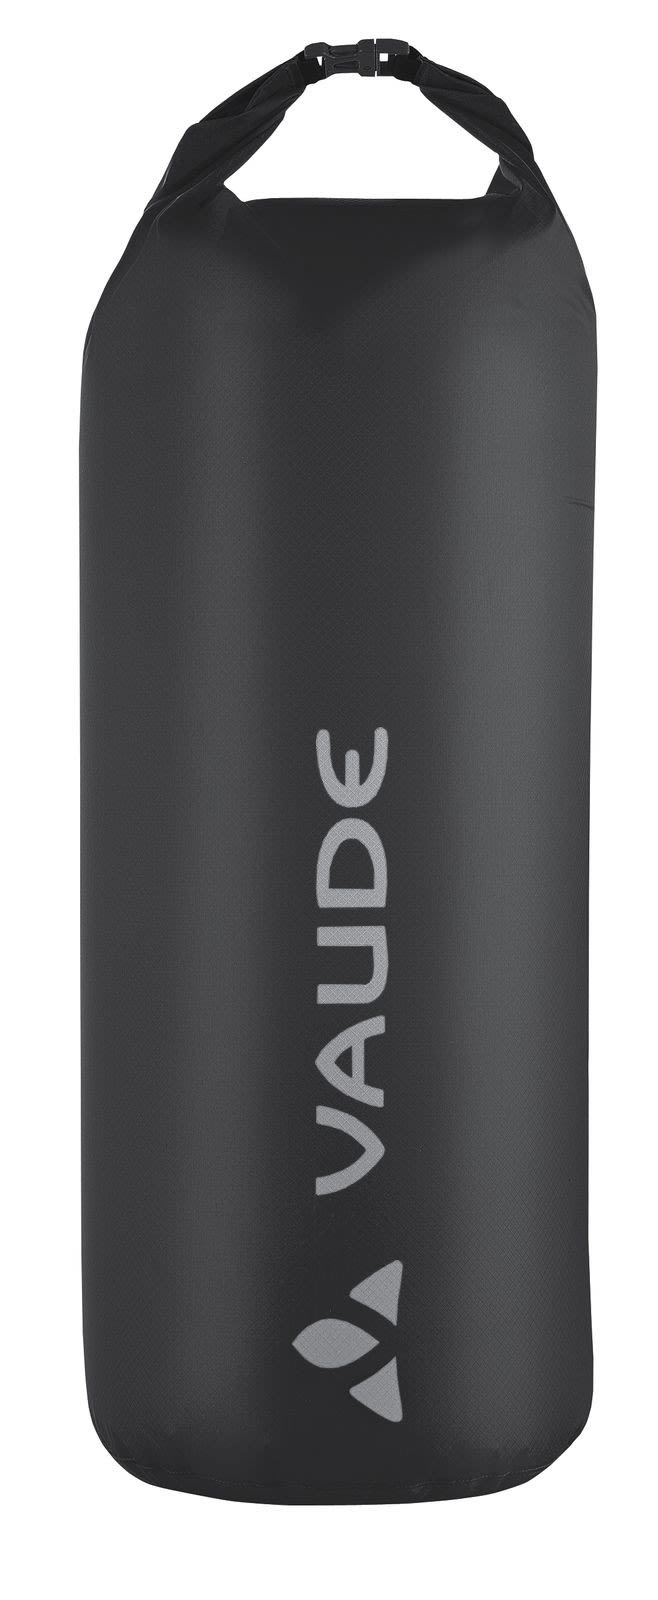 Vaude Drybag Cordura Light 20L Grau- Packscke- Grsse 20l - Farbe Anthracite